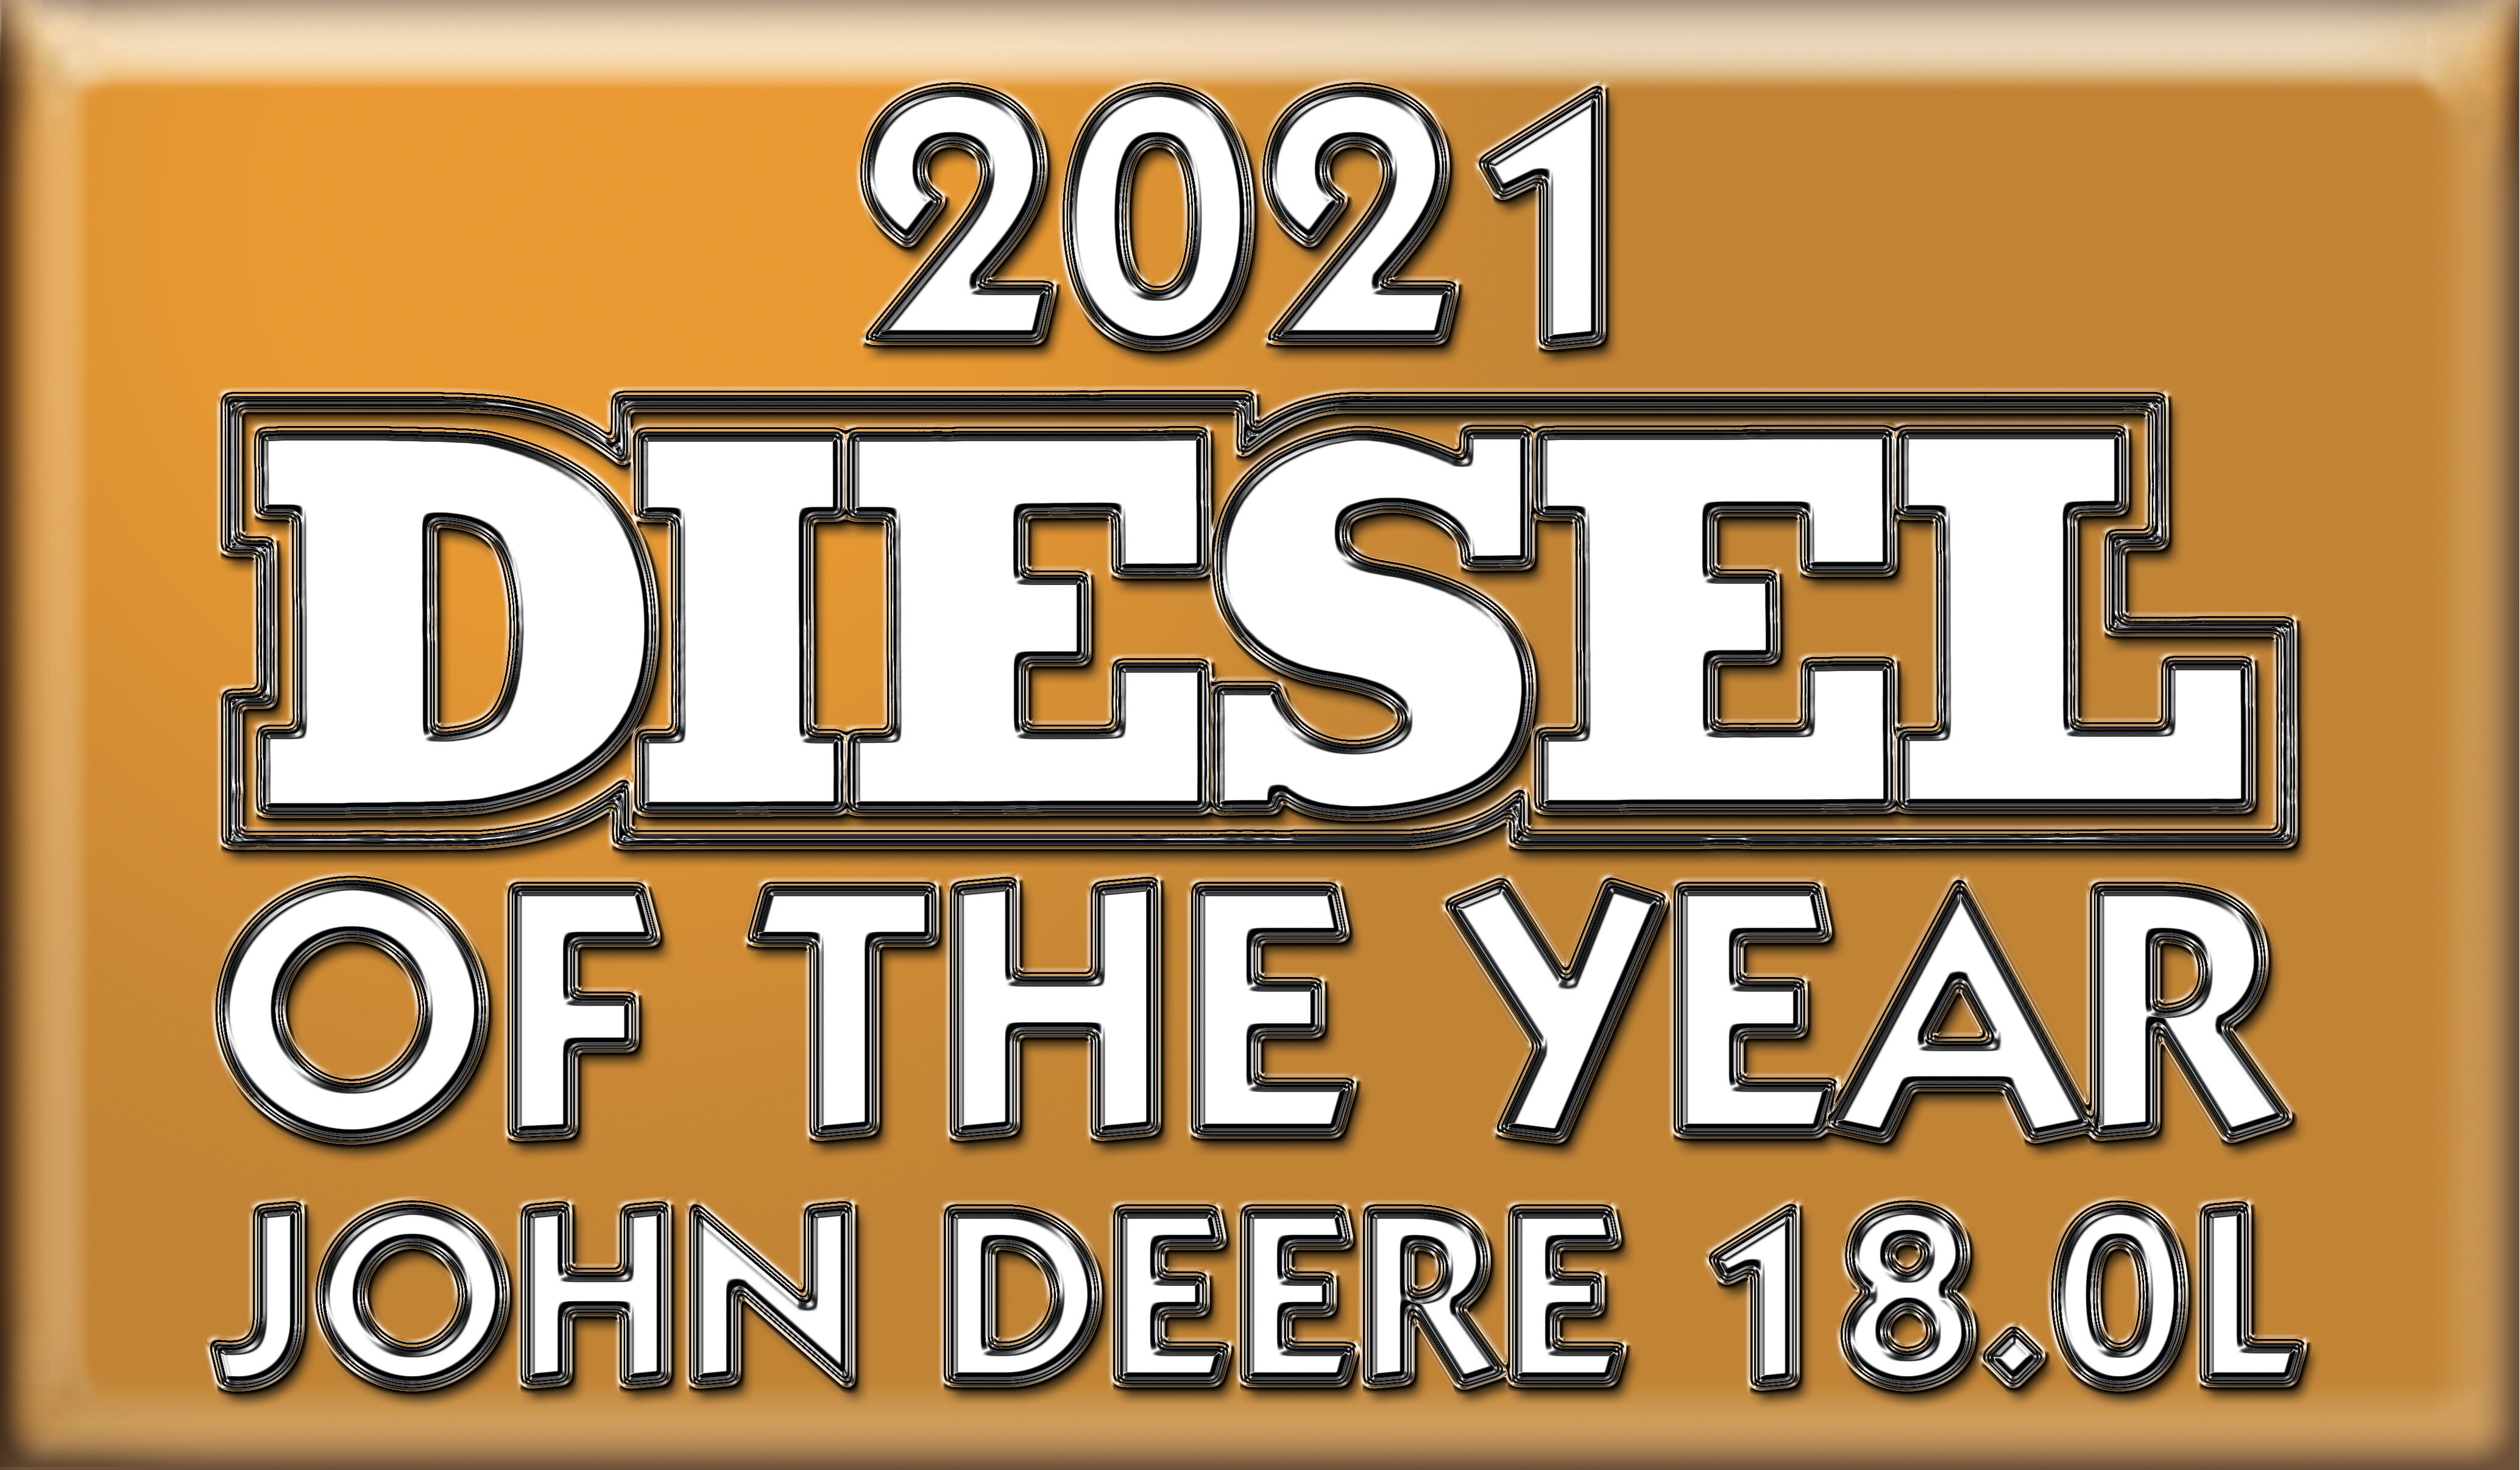 John Deere si aggiudica il Diesel of the Year 2021